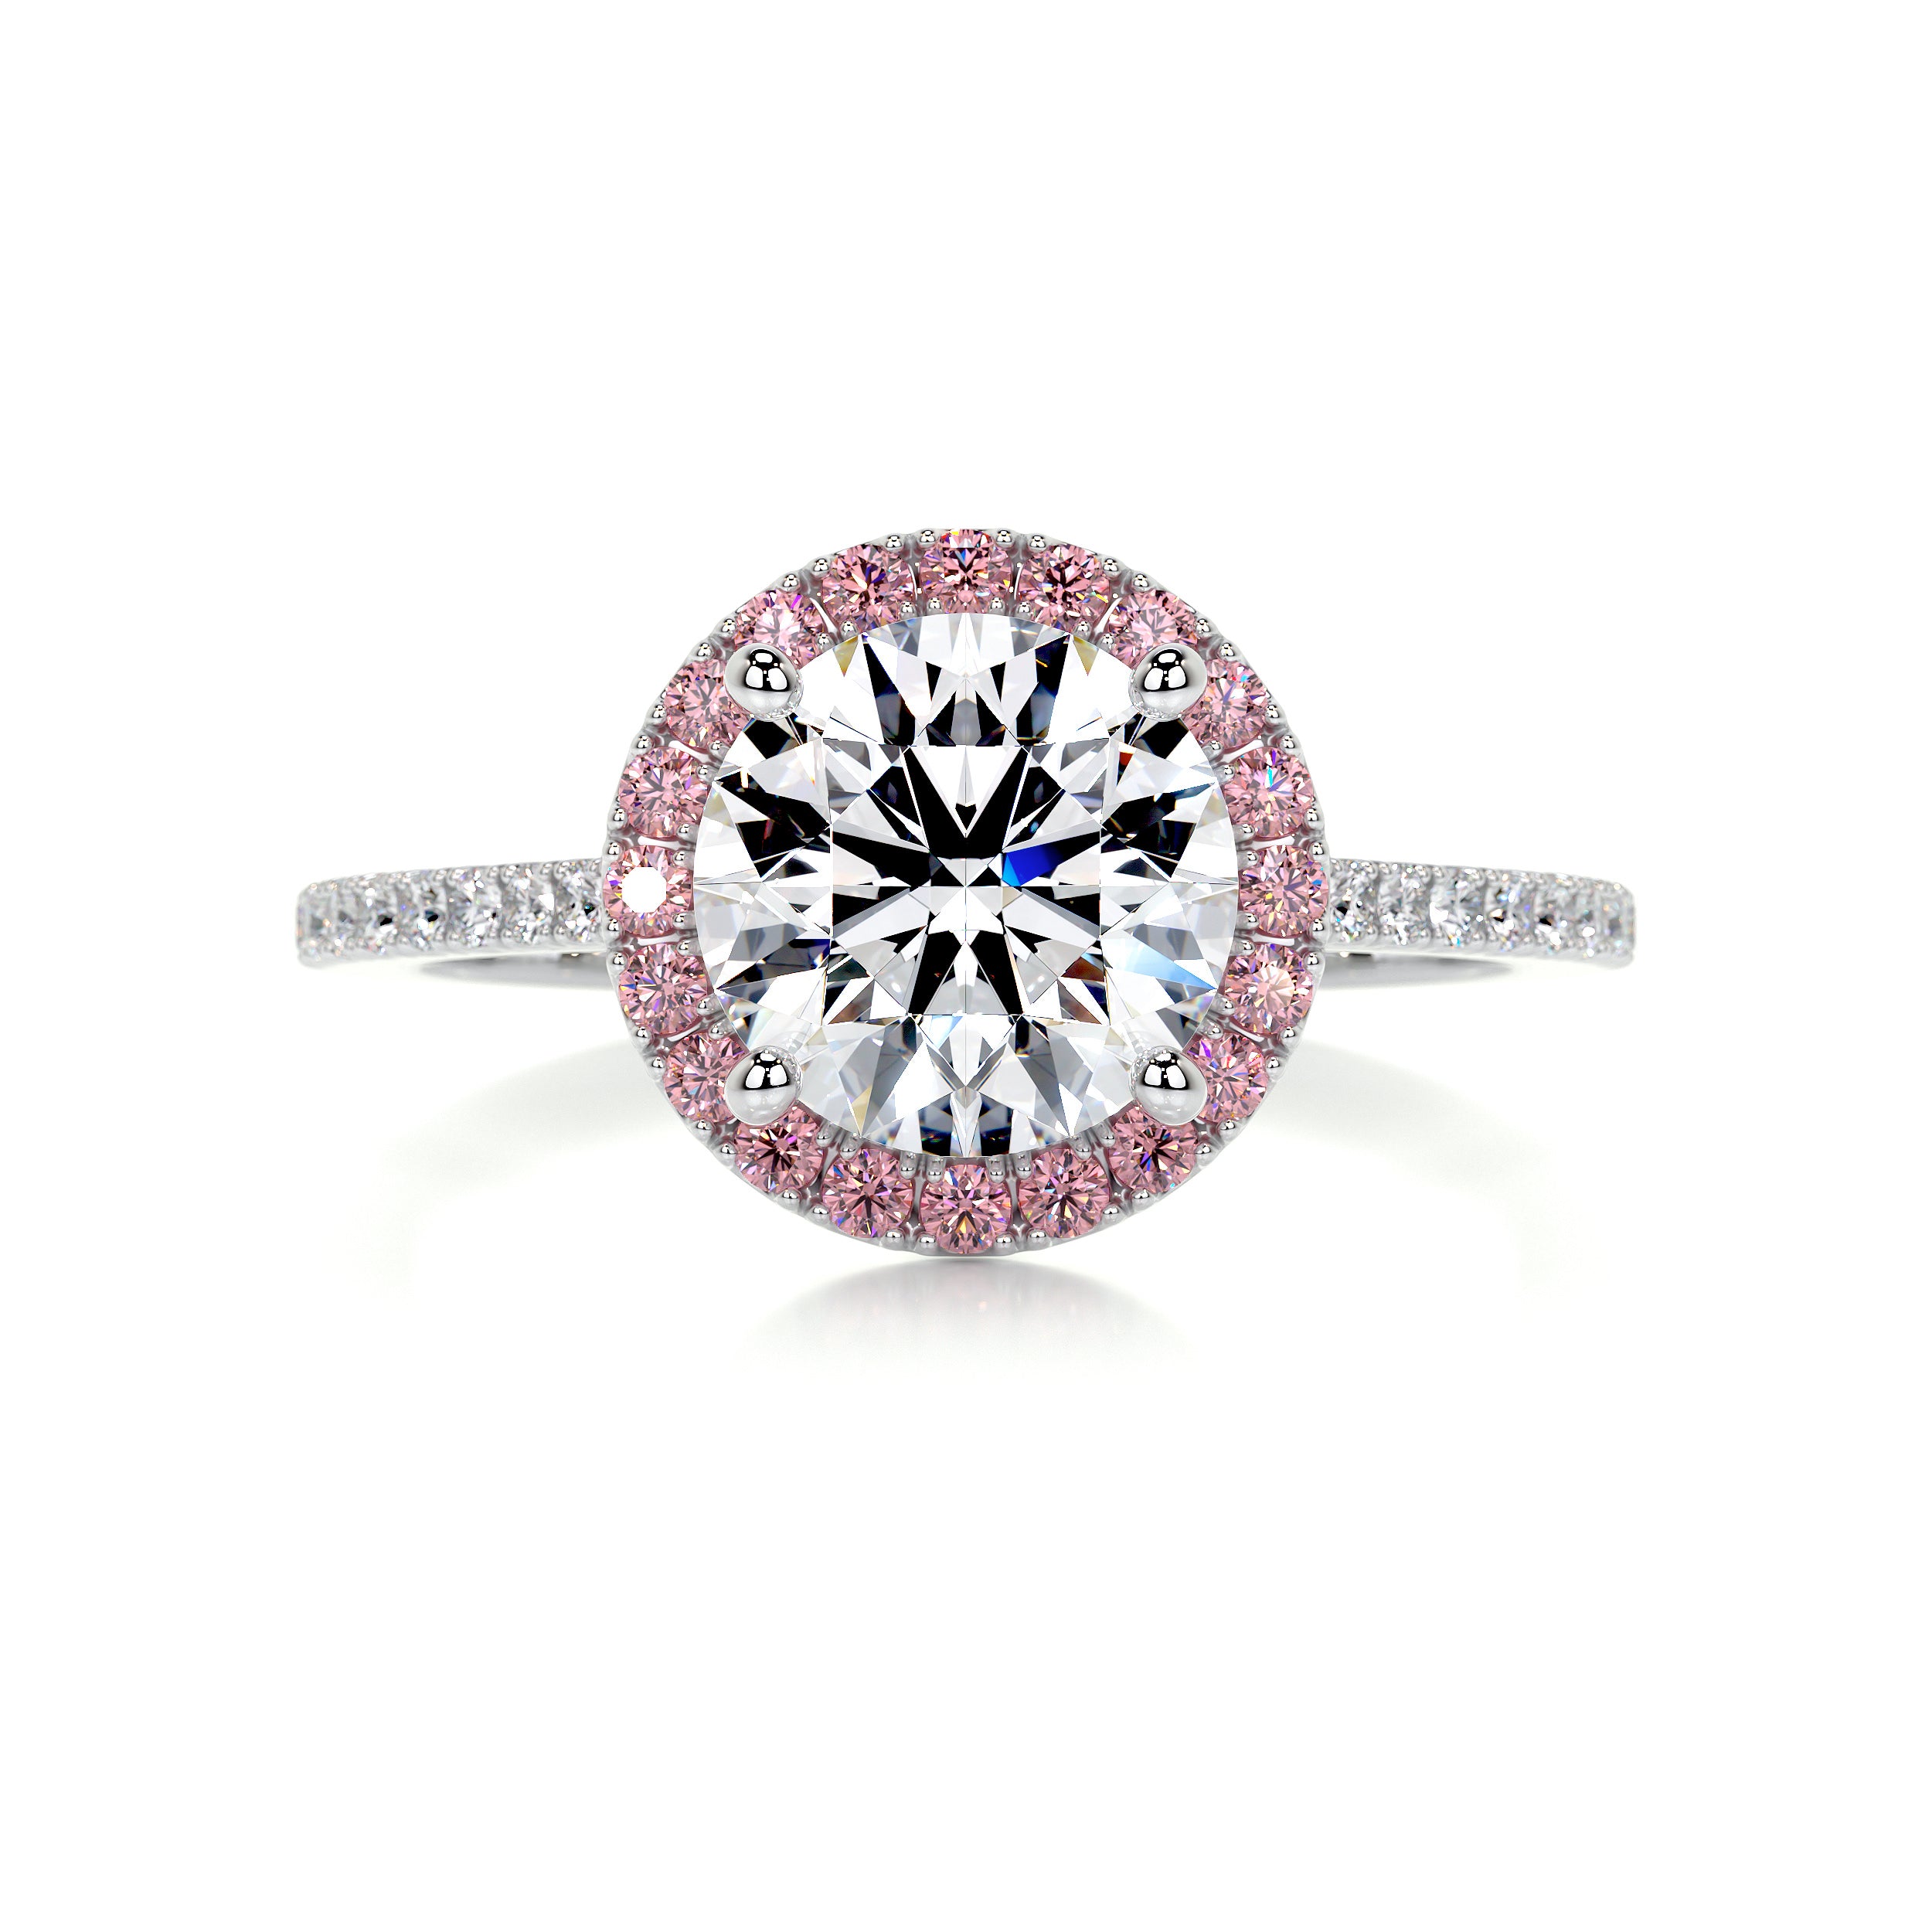 Layla Diamond Engagement Ring - 18K White Gold